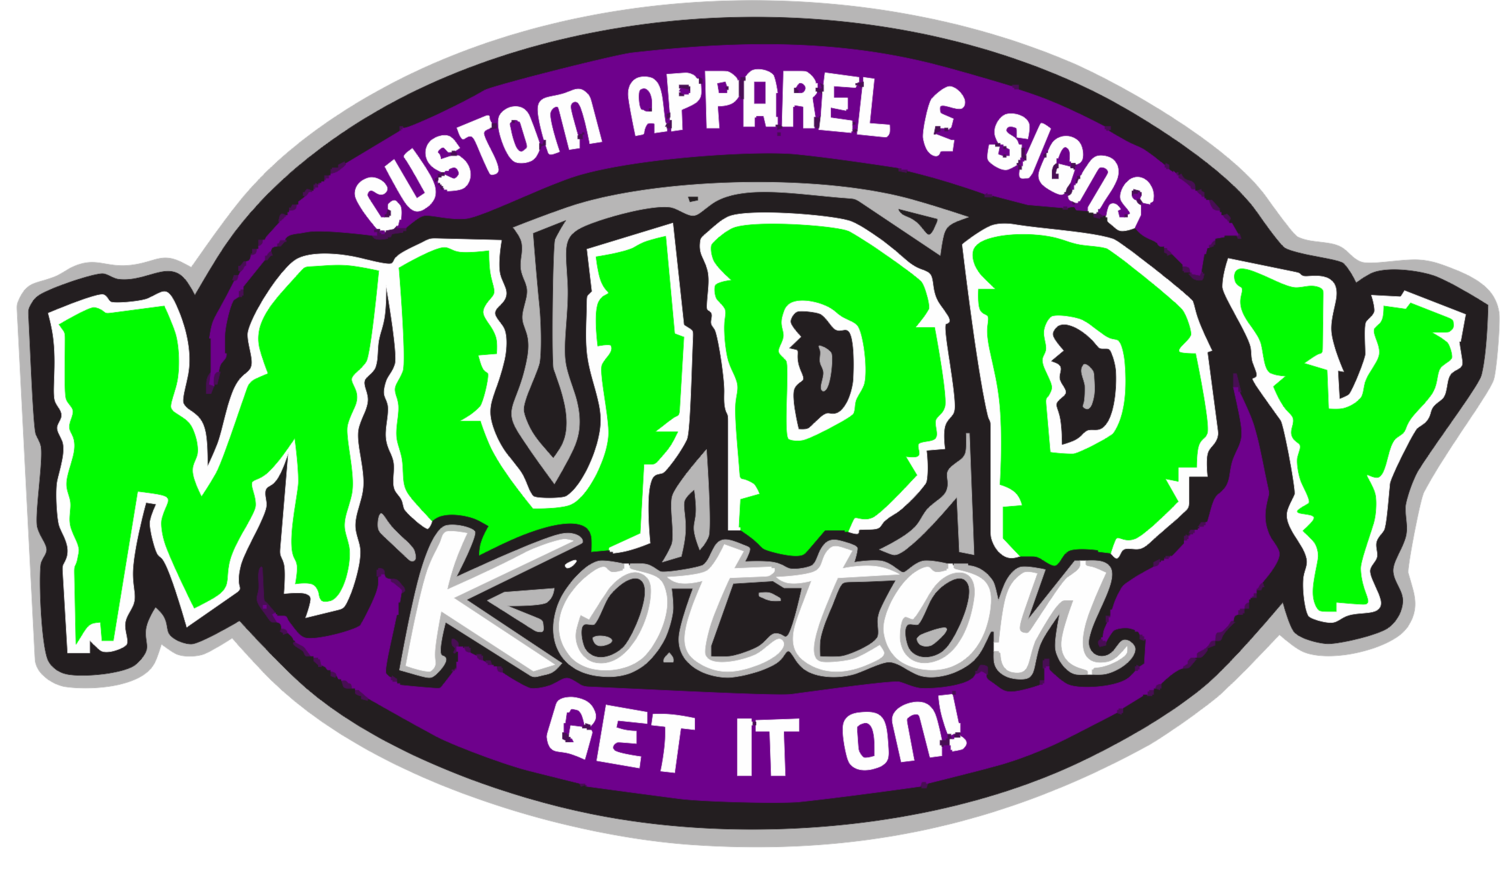 Muddy Kotton